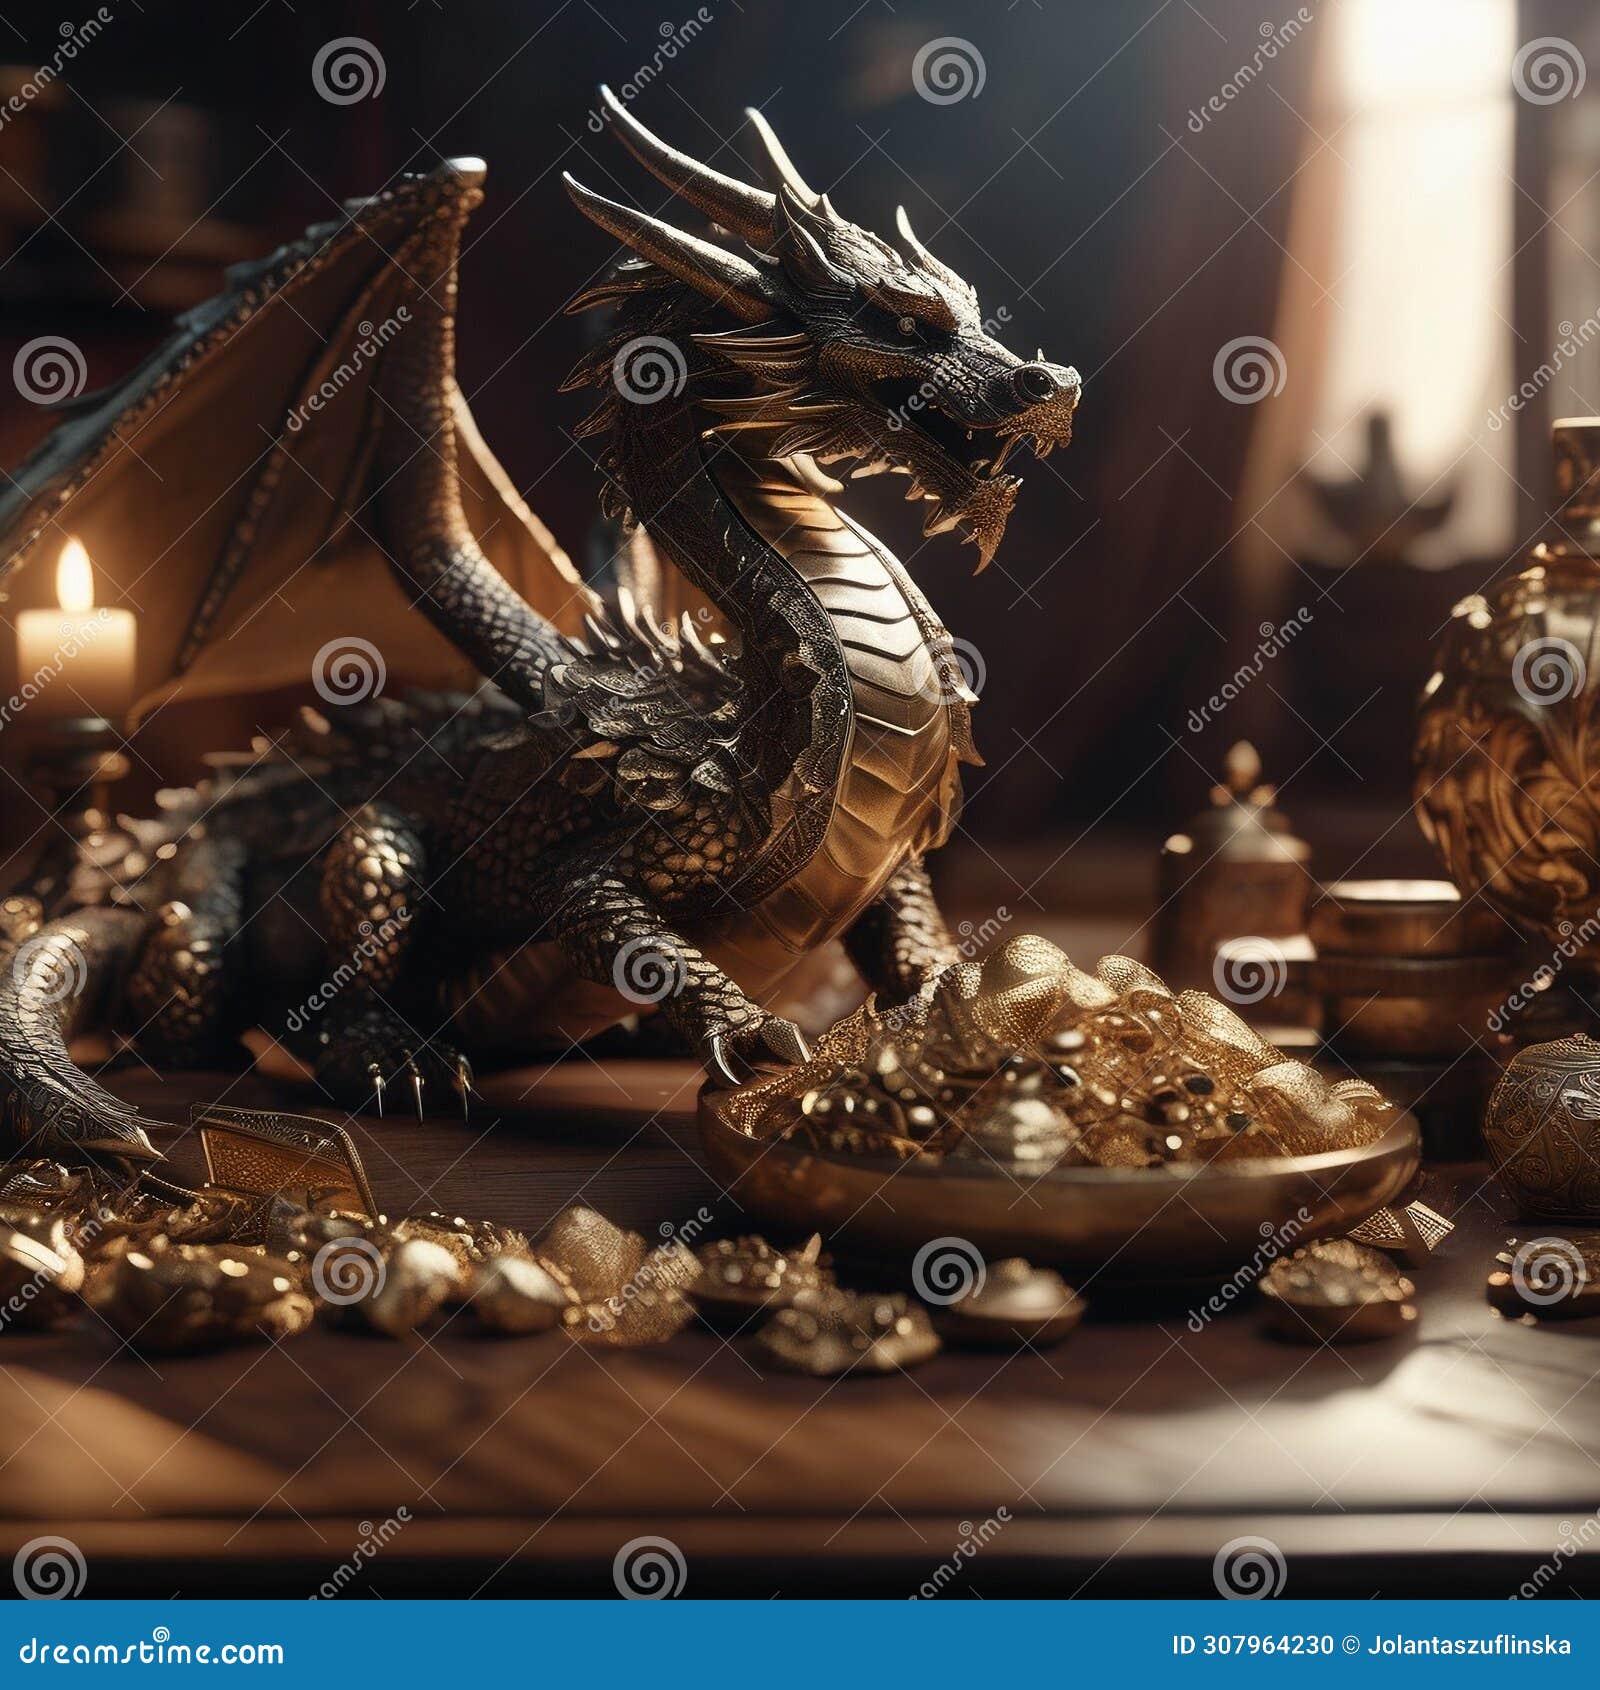 a dragon guarding a treasure hoard